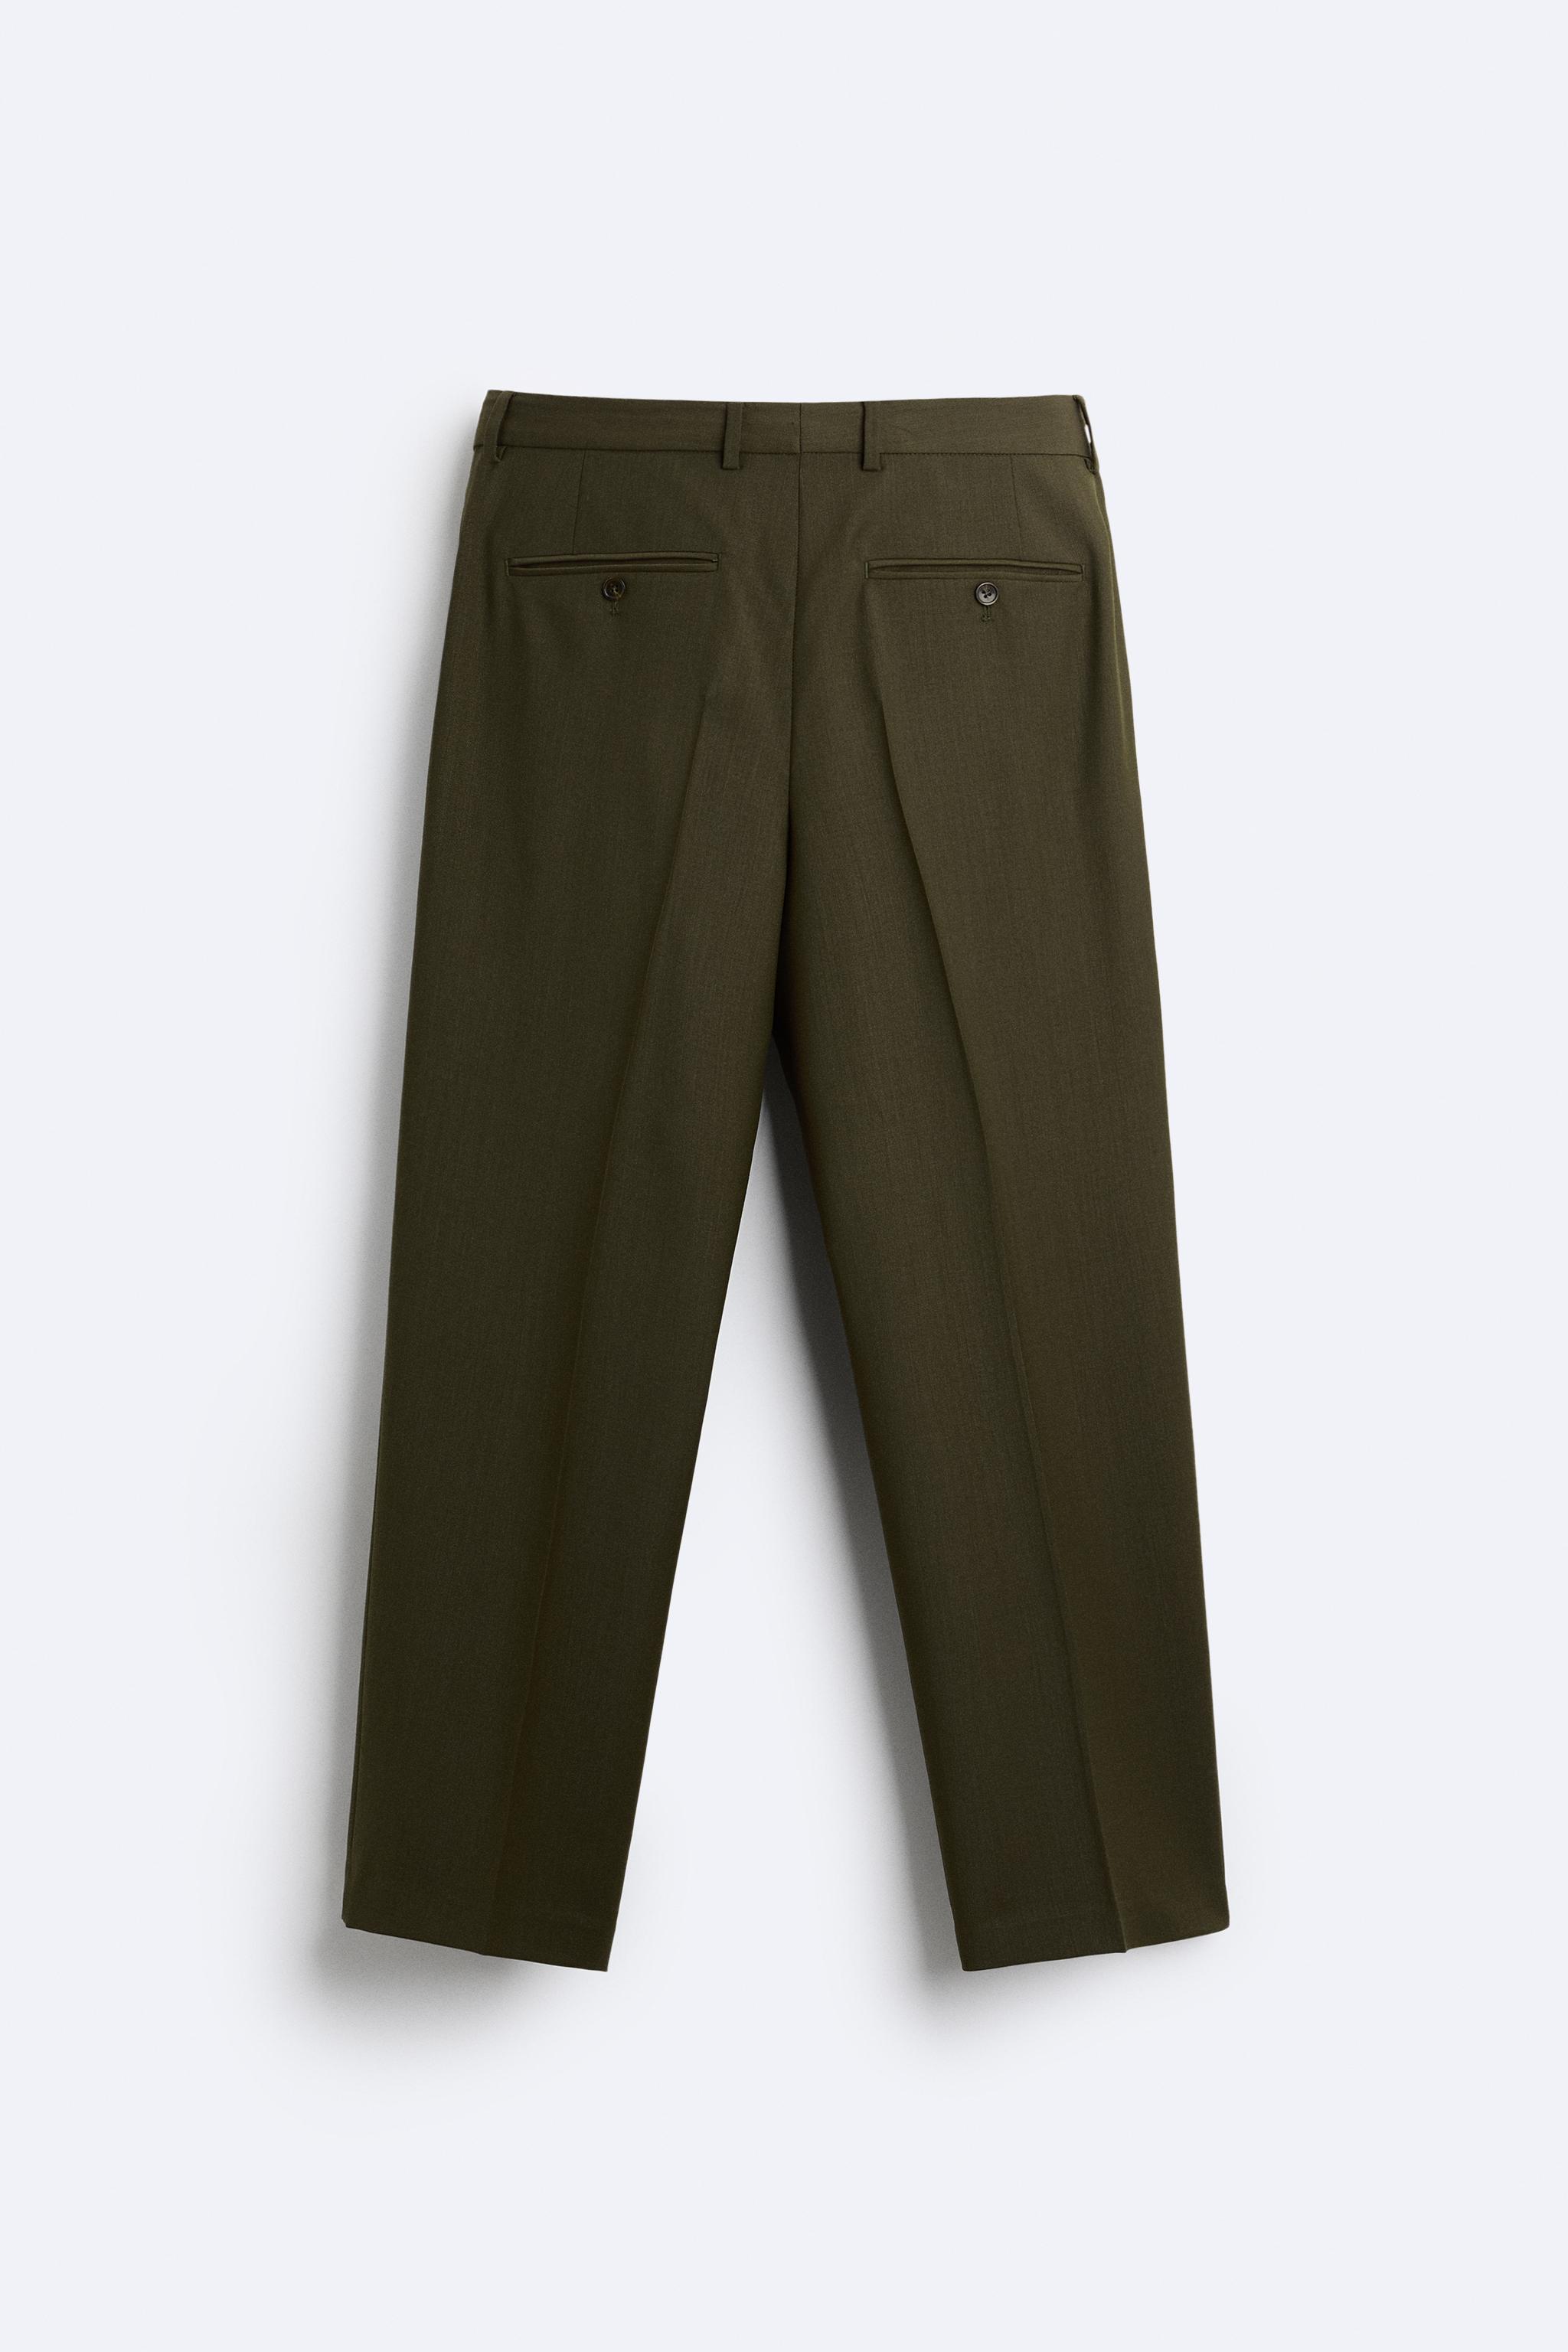 Men's Olive Green Pants